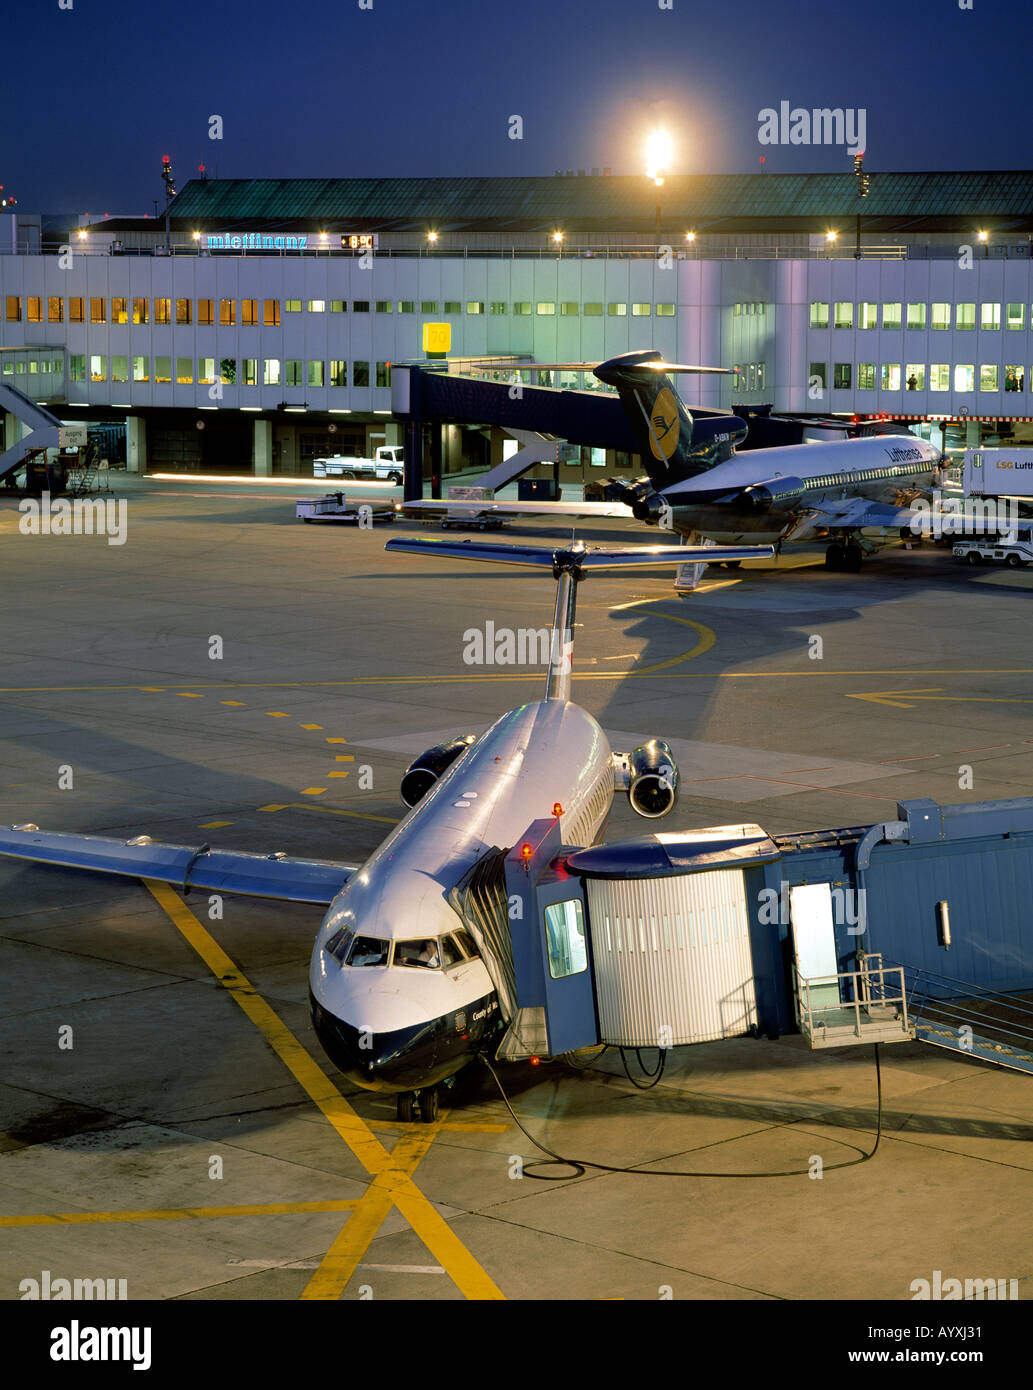 D-Duesseldorf, Rhine, North Rhine-Westphalia, airport, aeroplanes at terminals, evening mood, illuminated Stock Photo